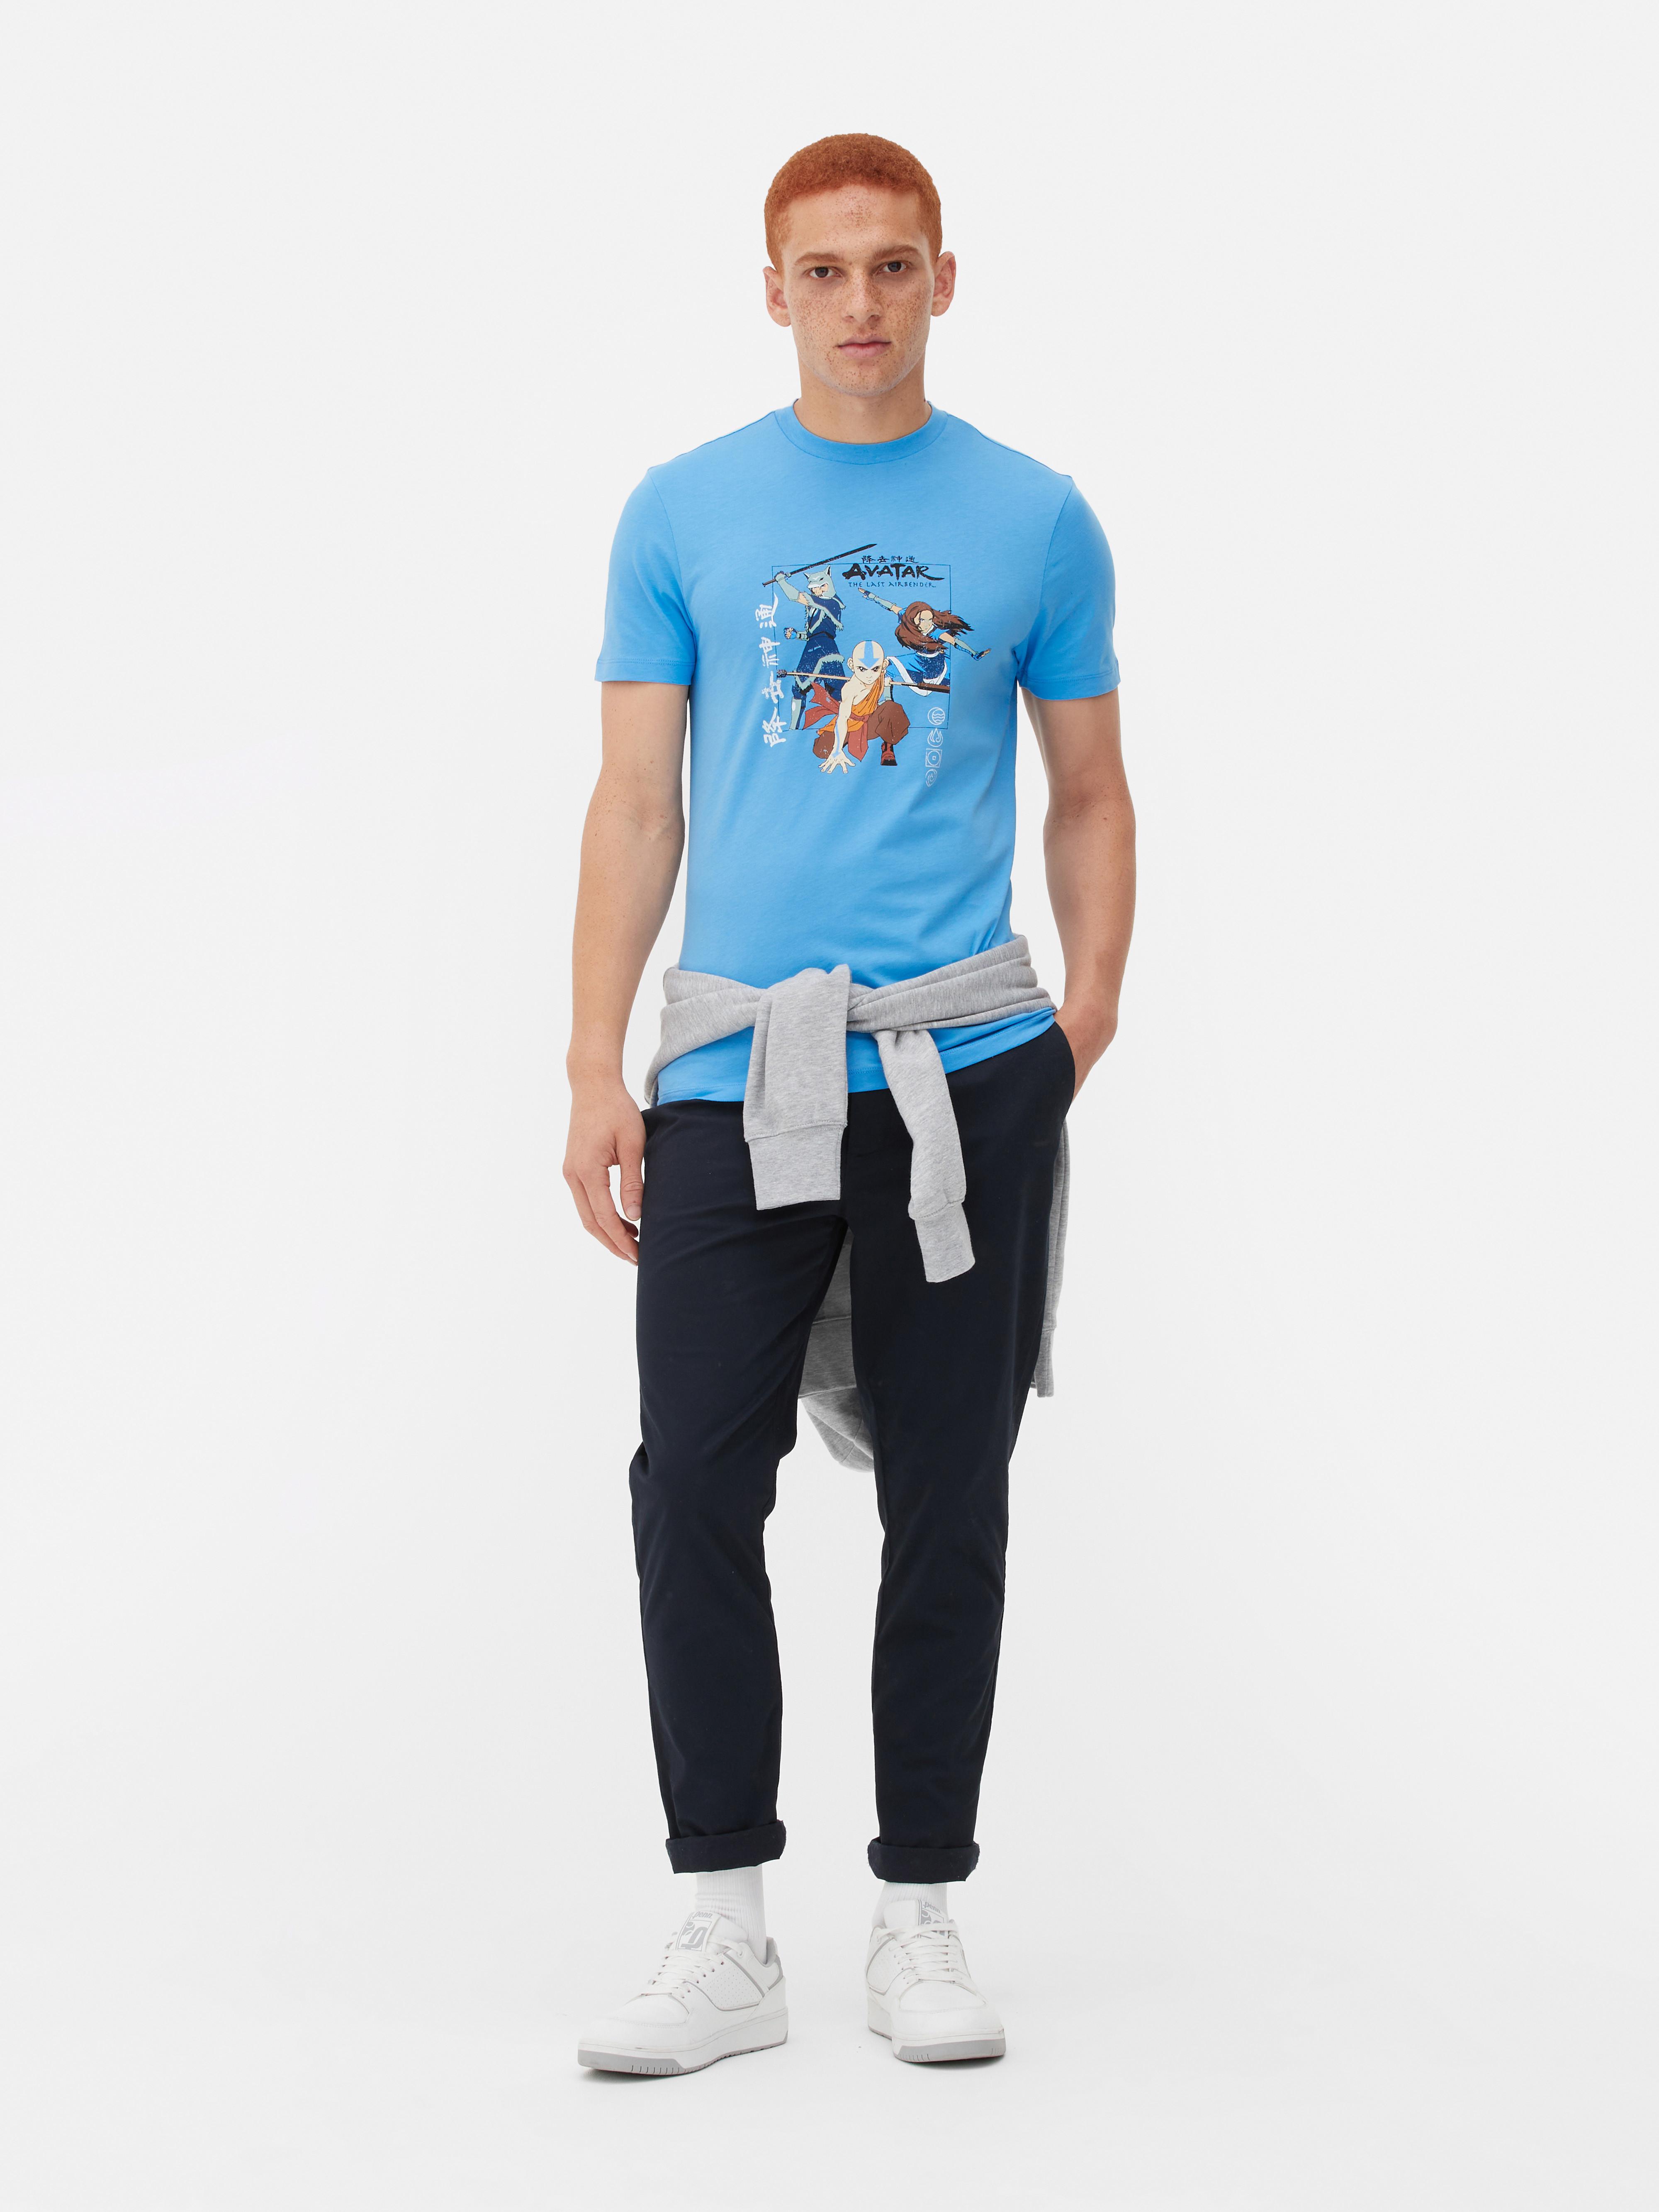 Avatar: The Last Airbender T-shirt